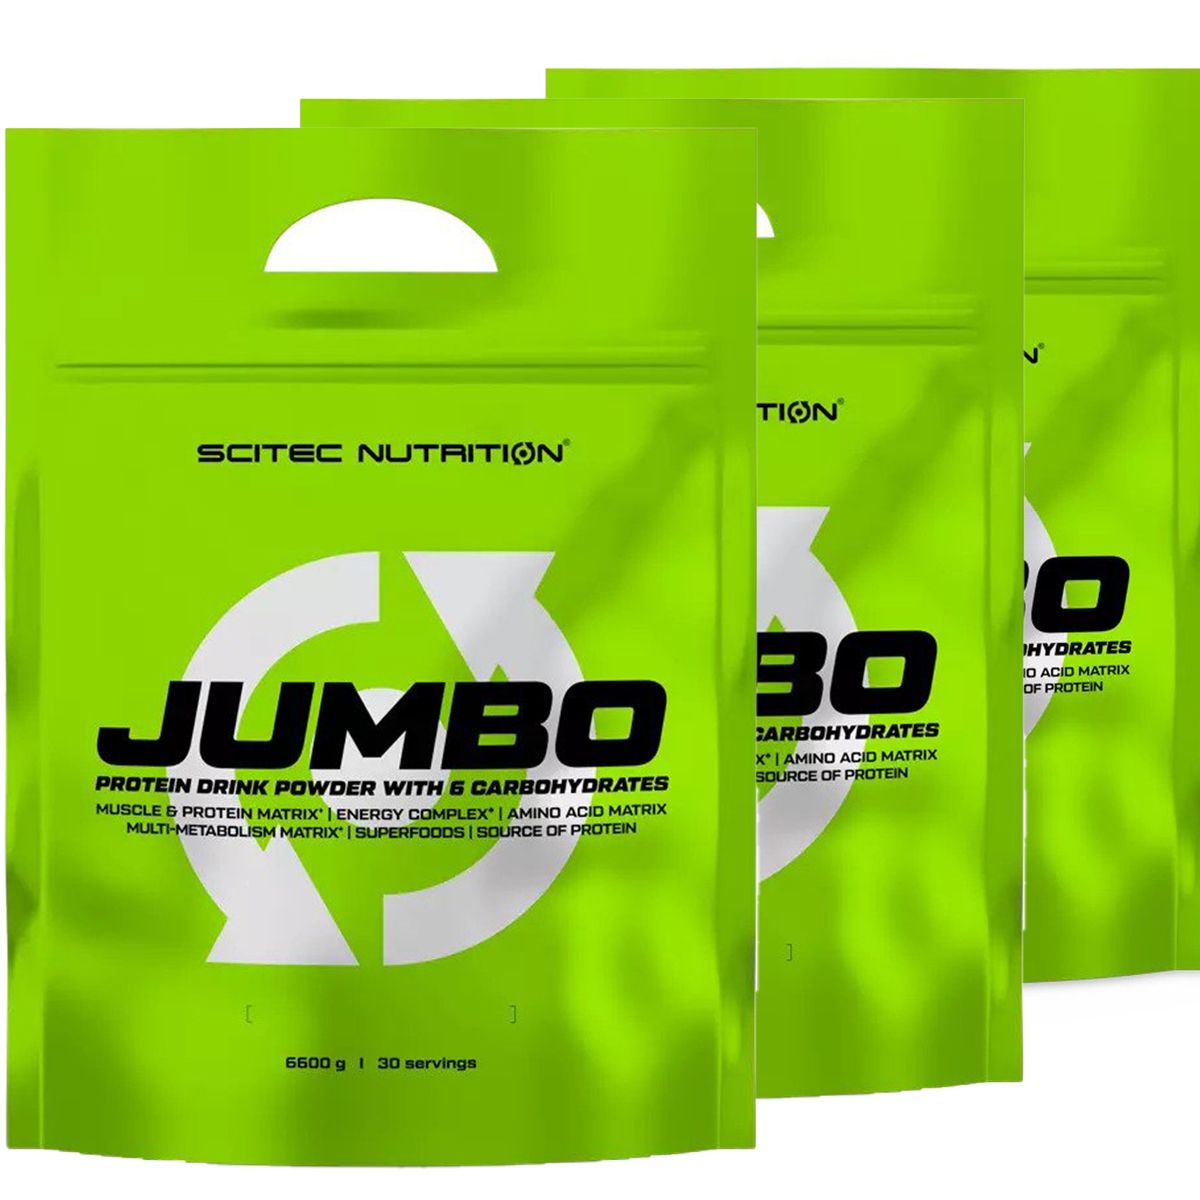 SCITEC NUTRITION - JUMBO - 3 x 6,6 KG